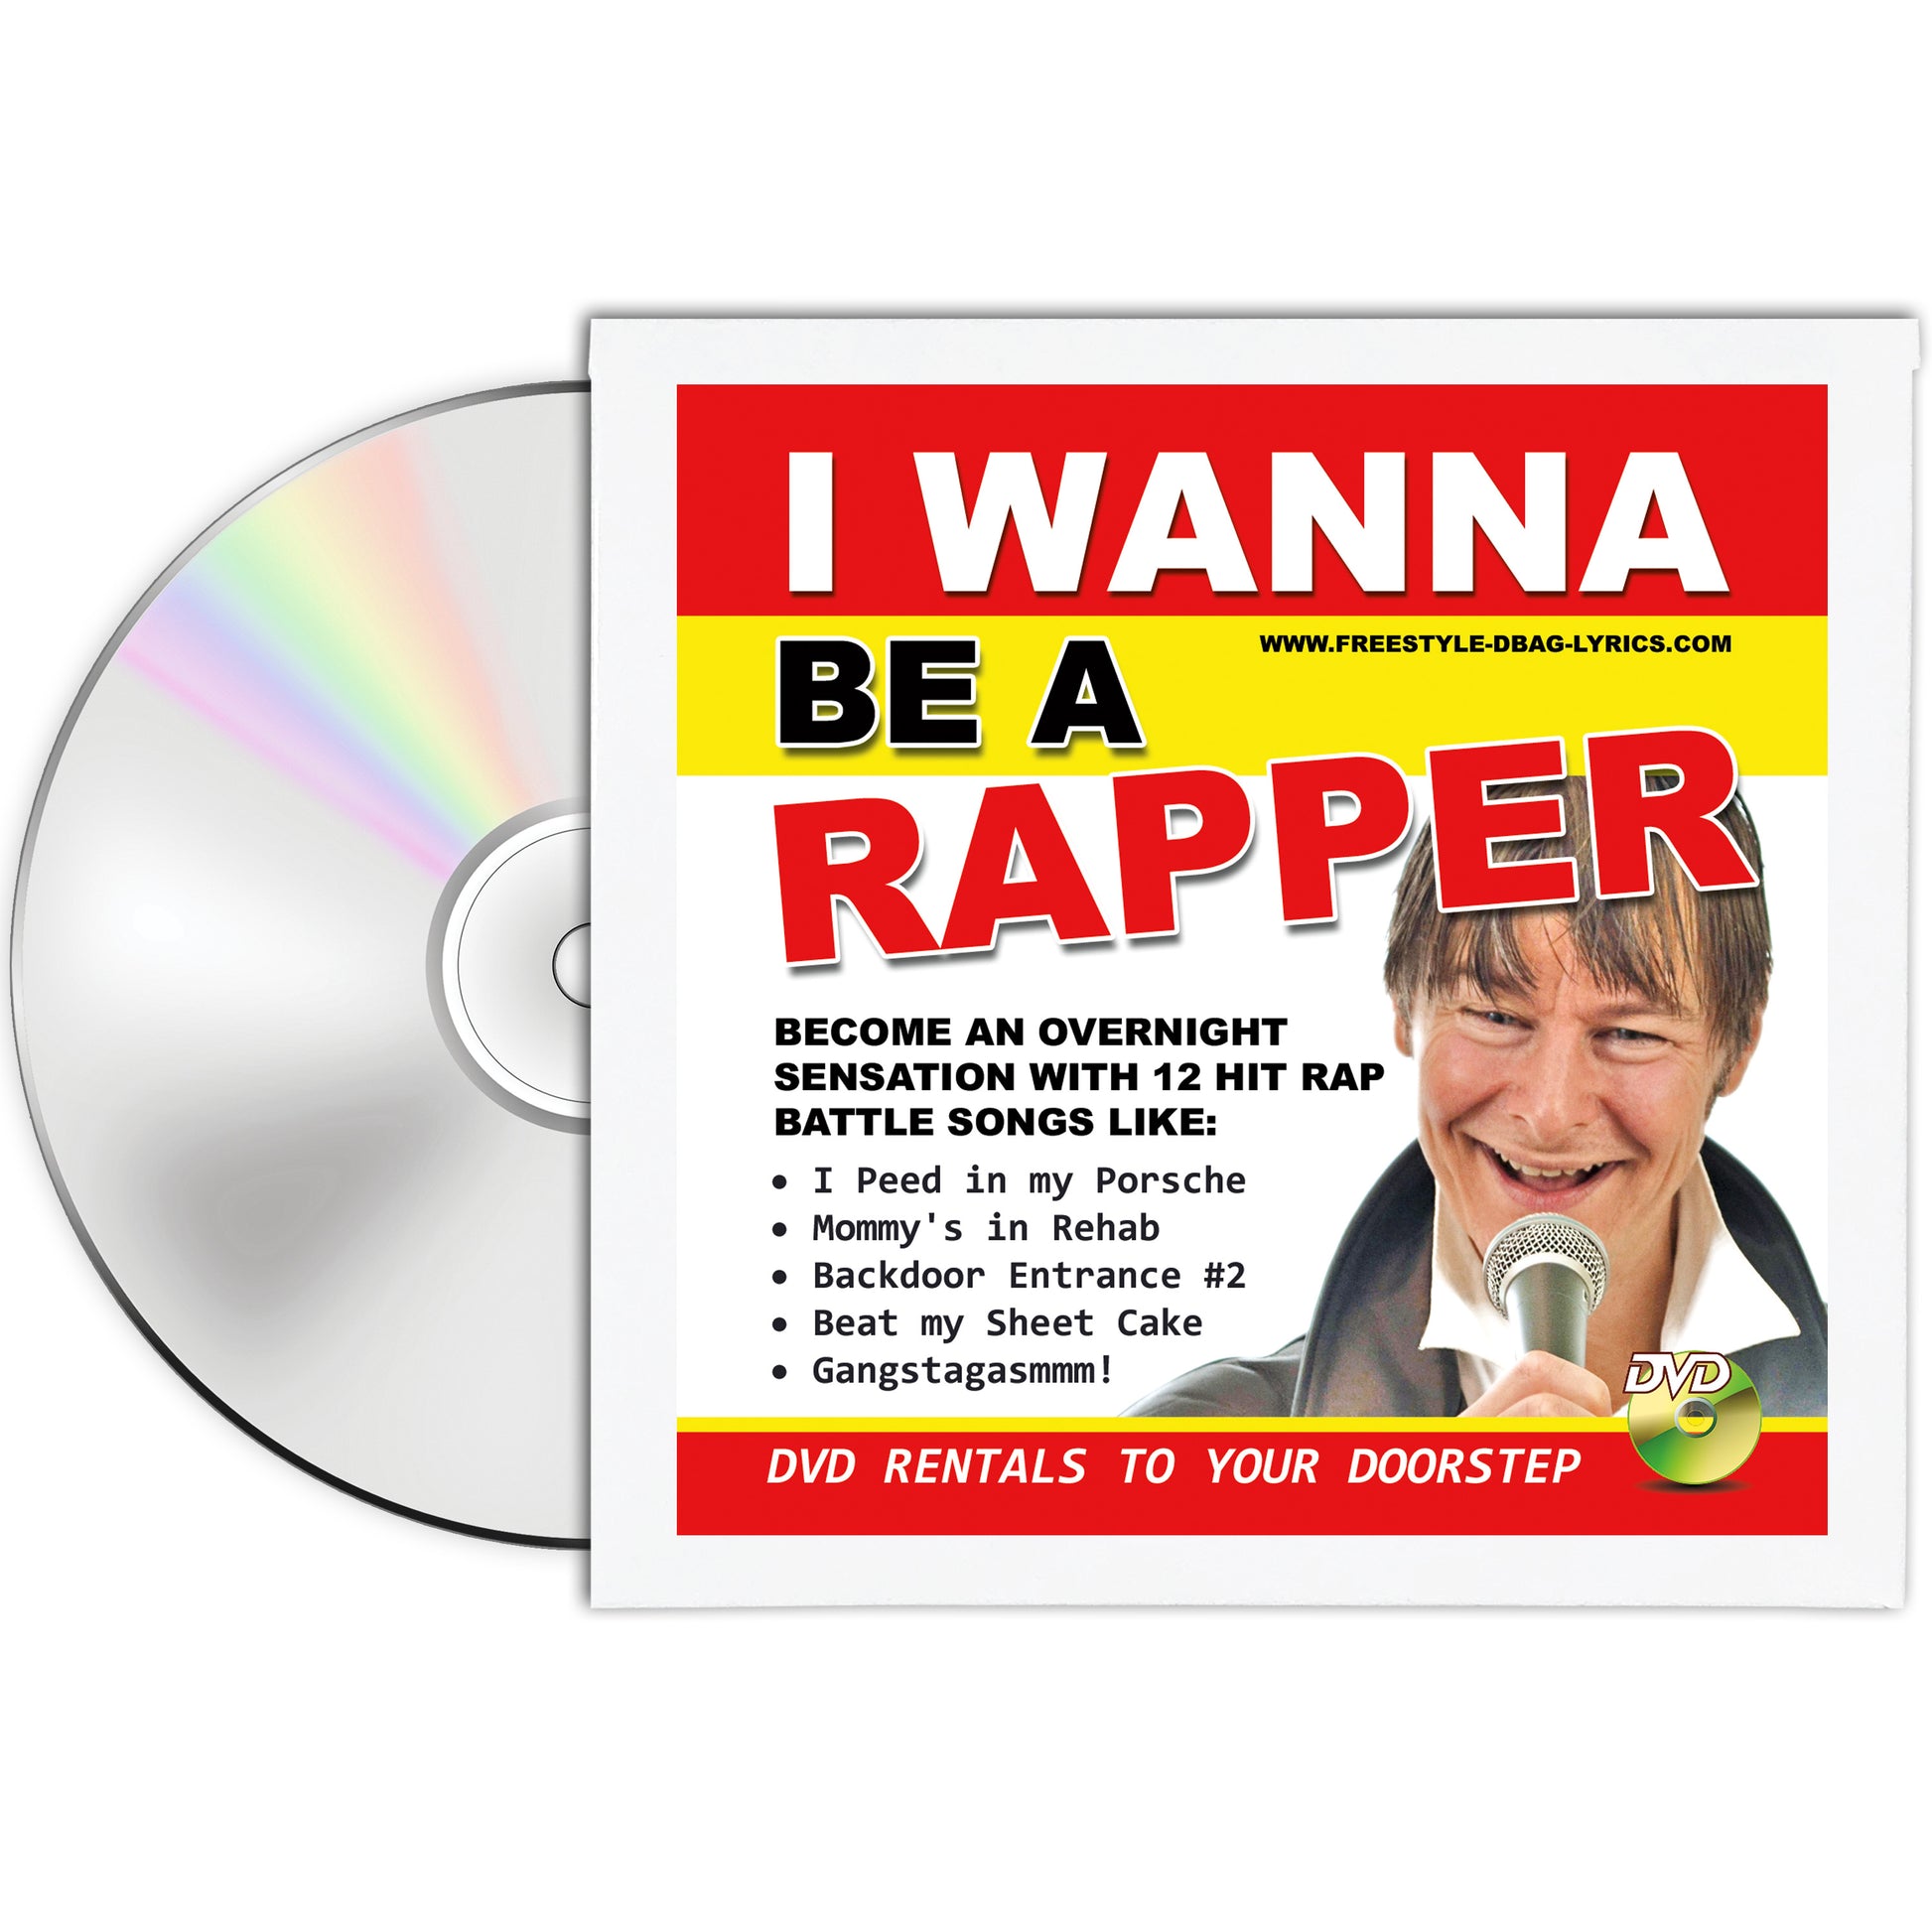 I Wanna Be A Rapper Fake DVD mail prank